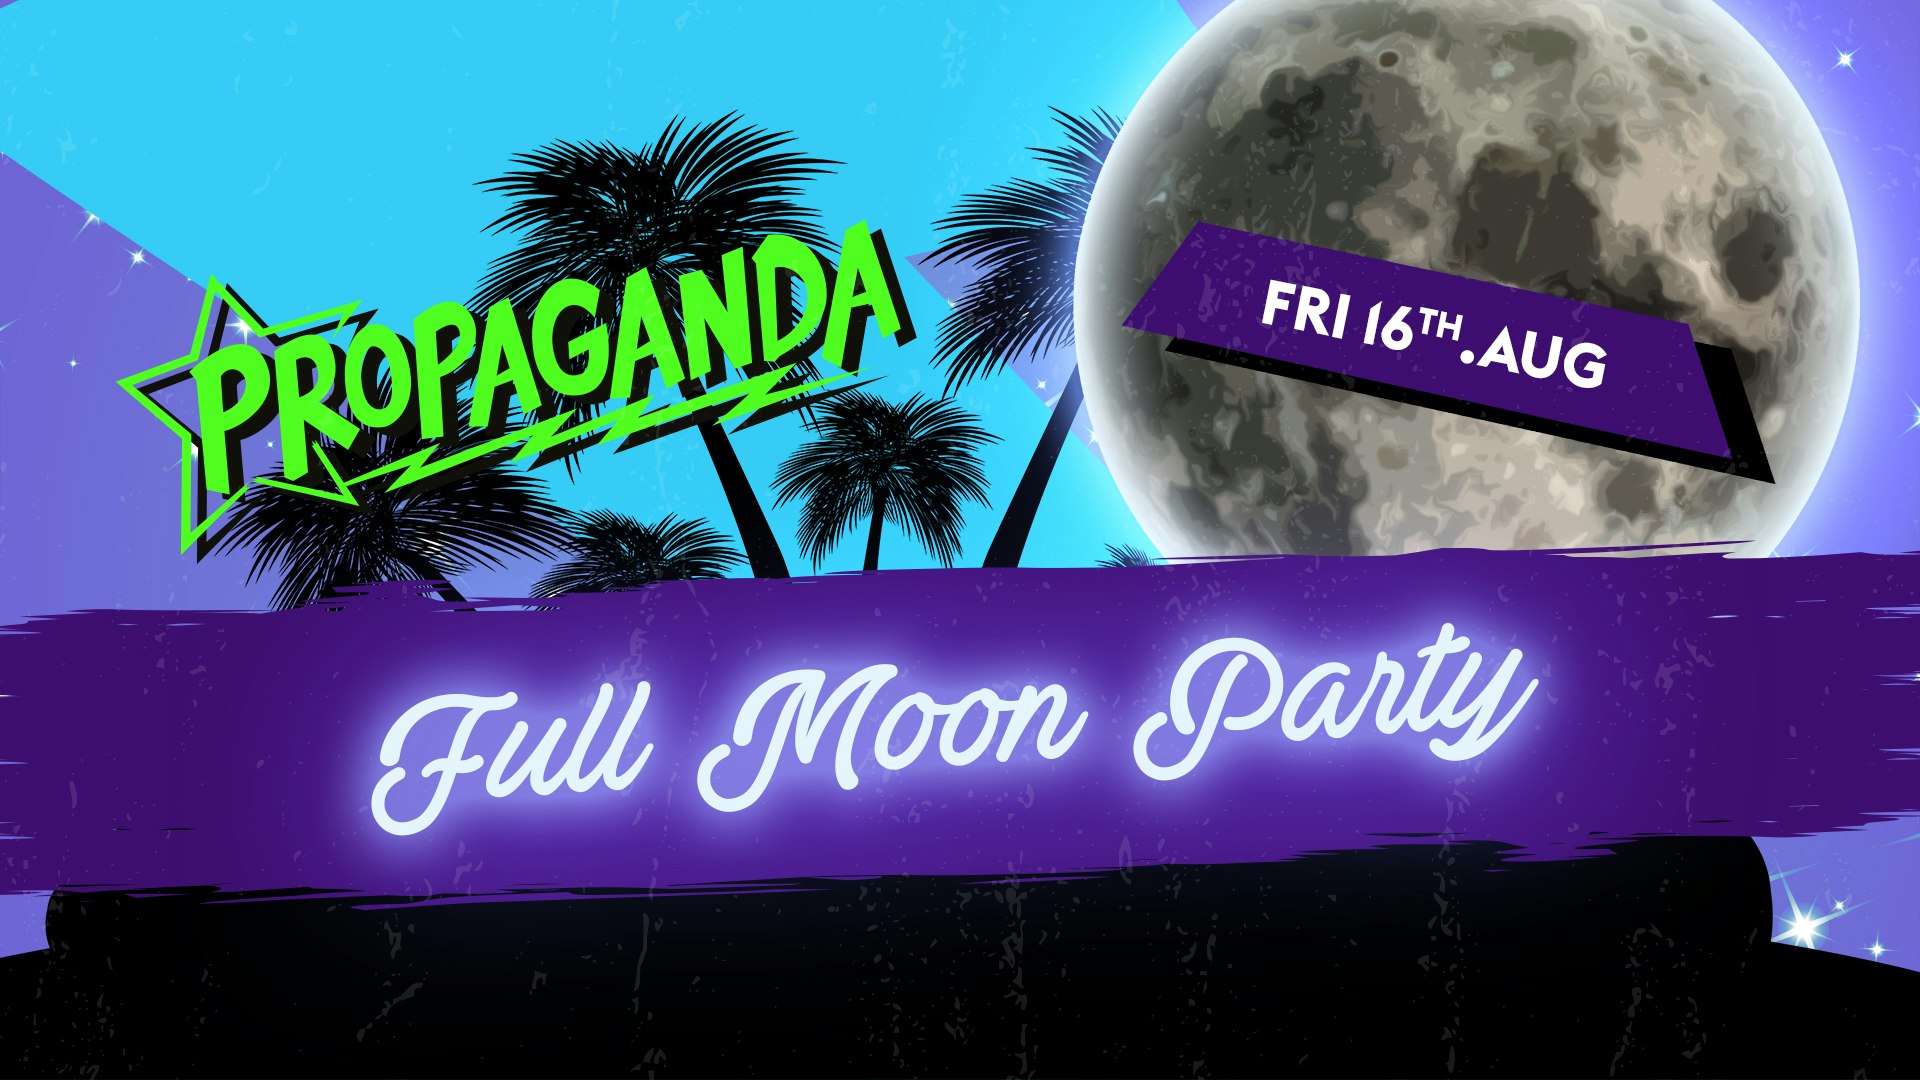 Propaganda Edinburgh – Full Moon Party